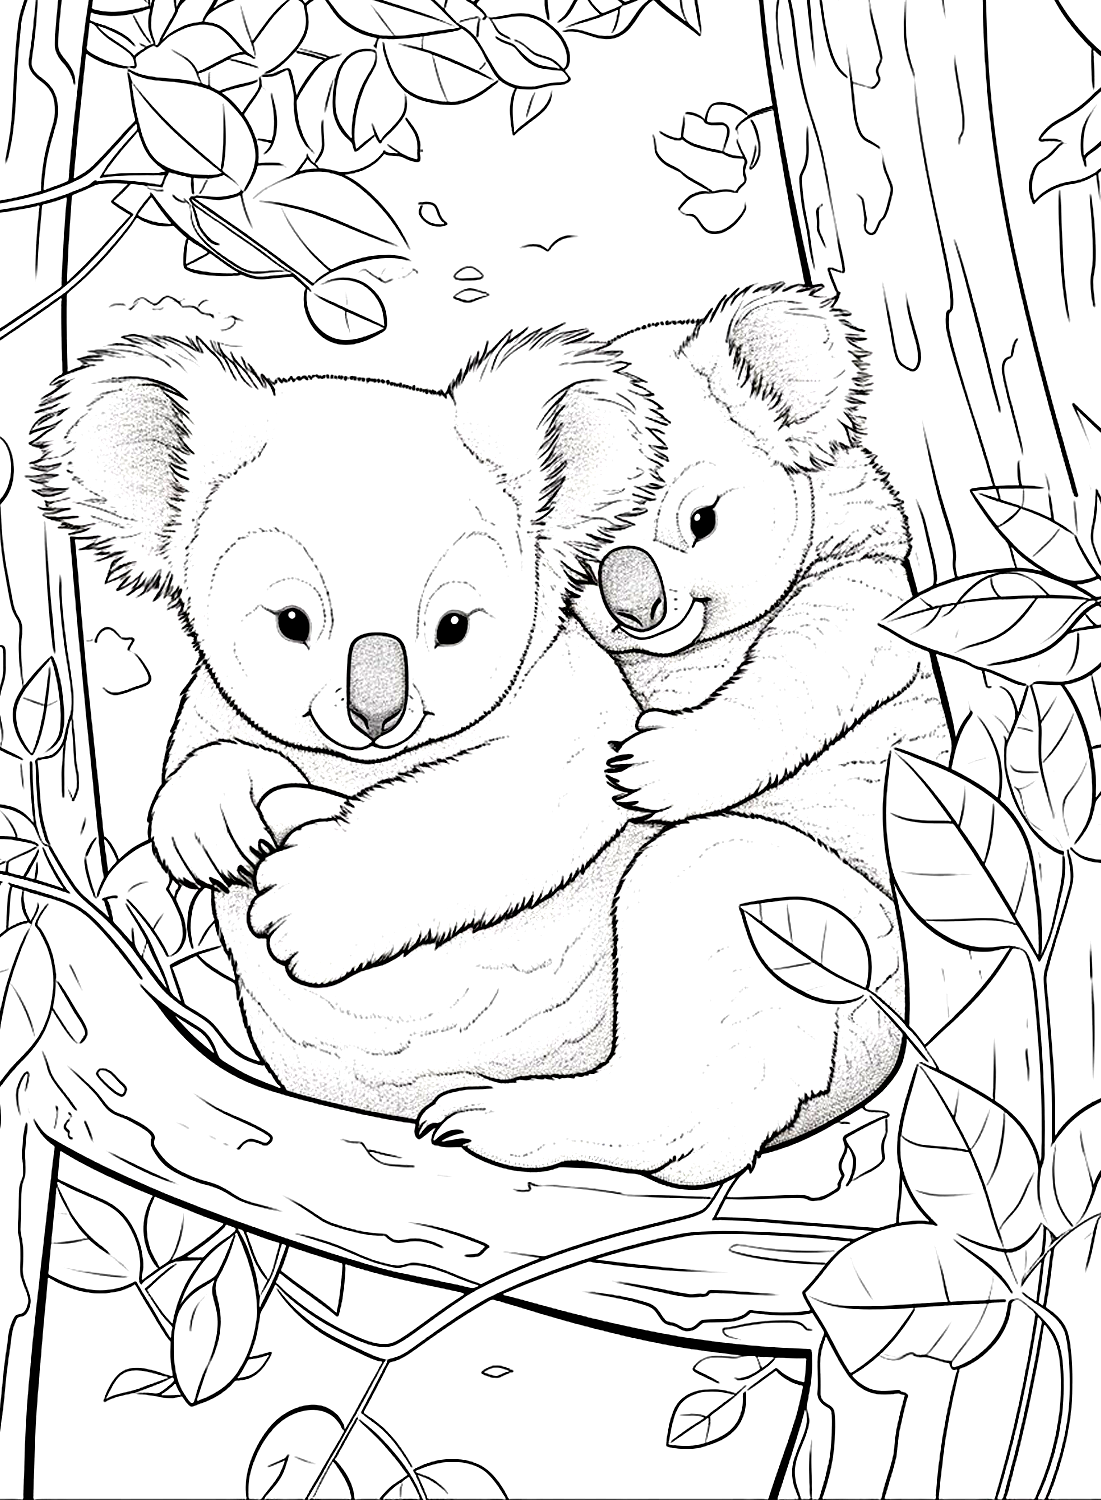 Two adorable Koala picture